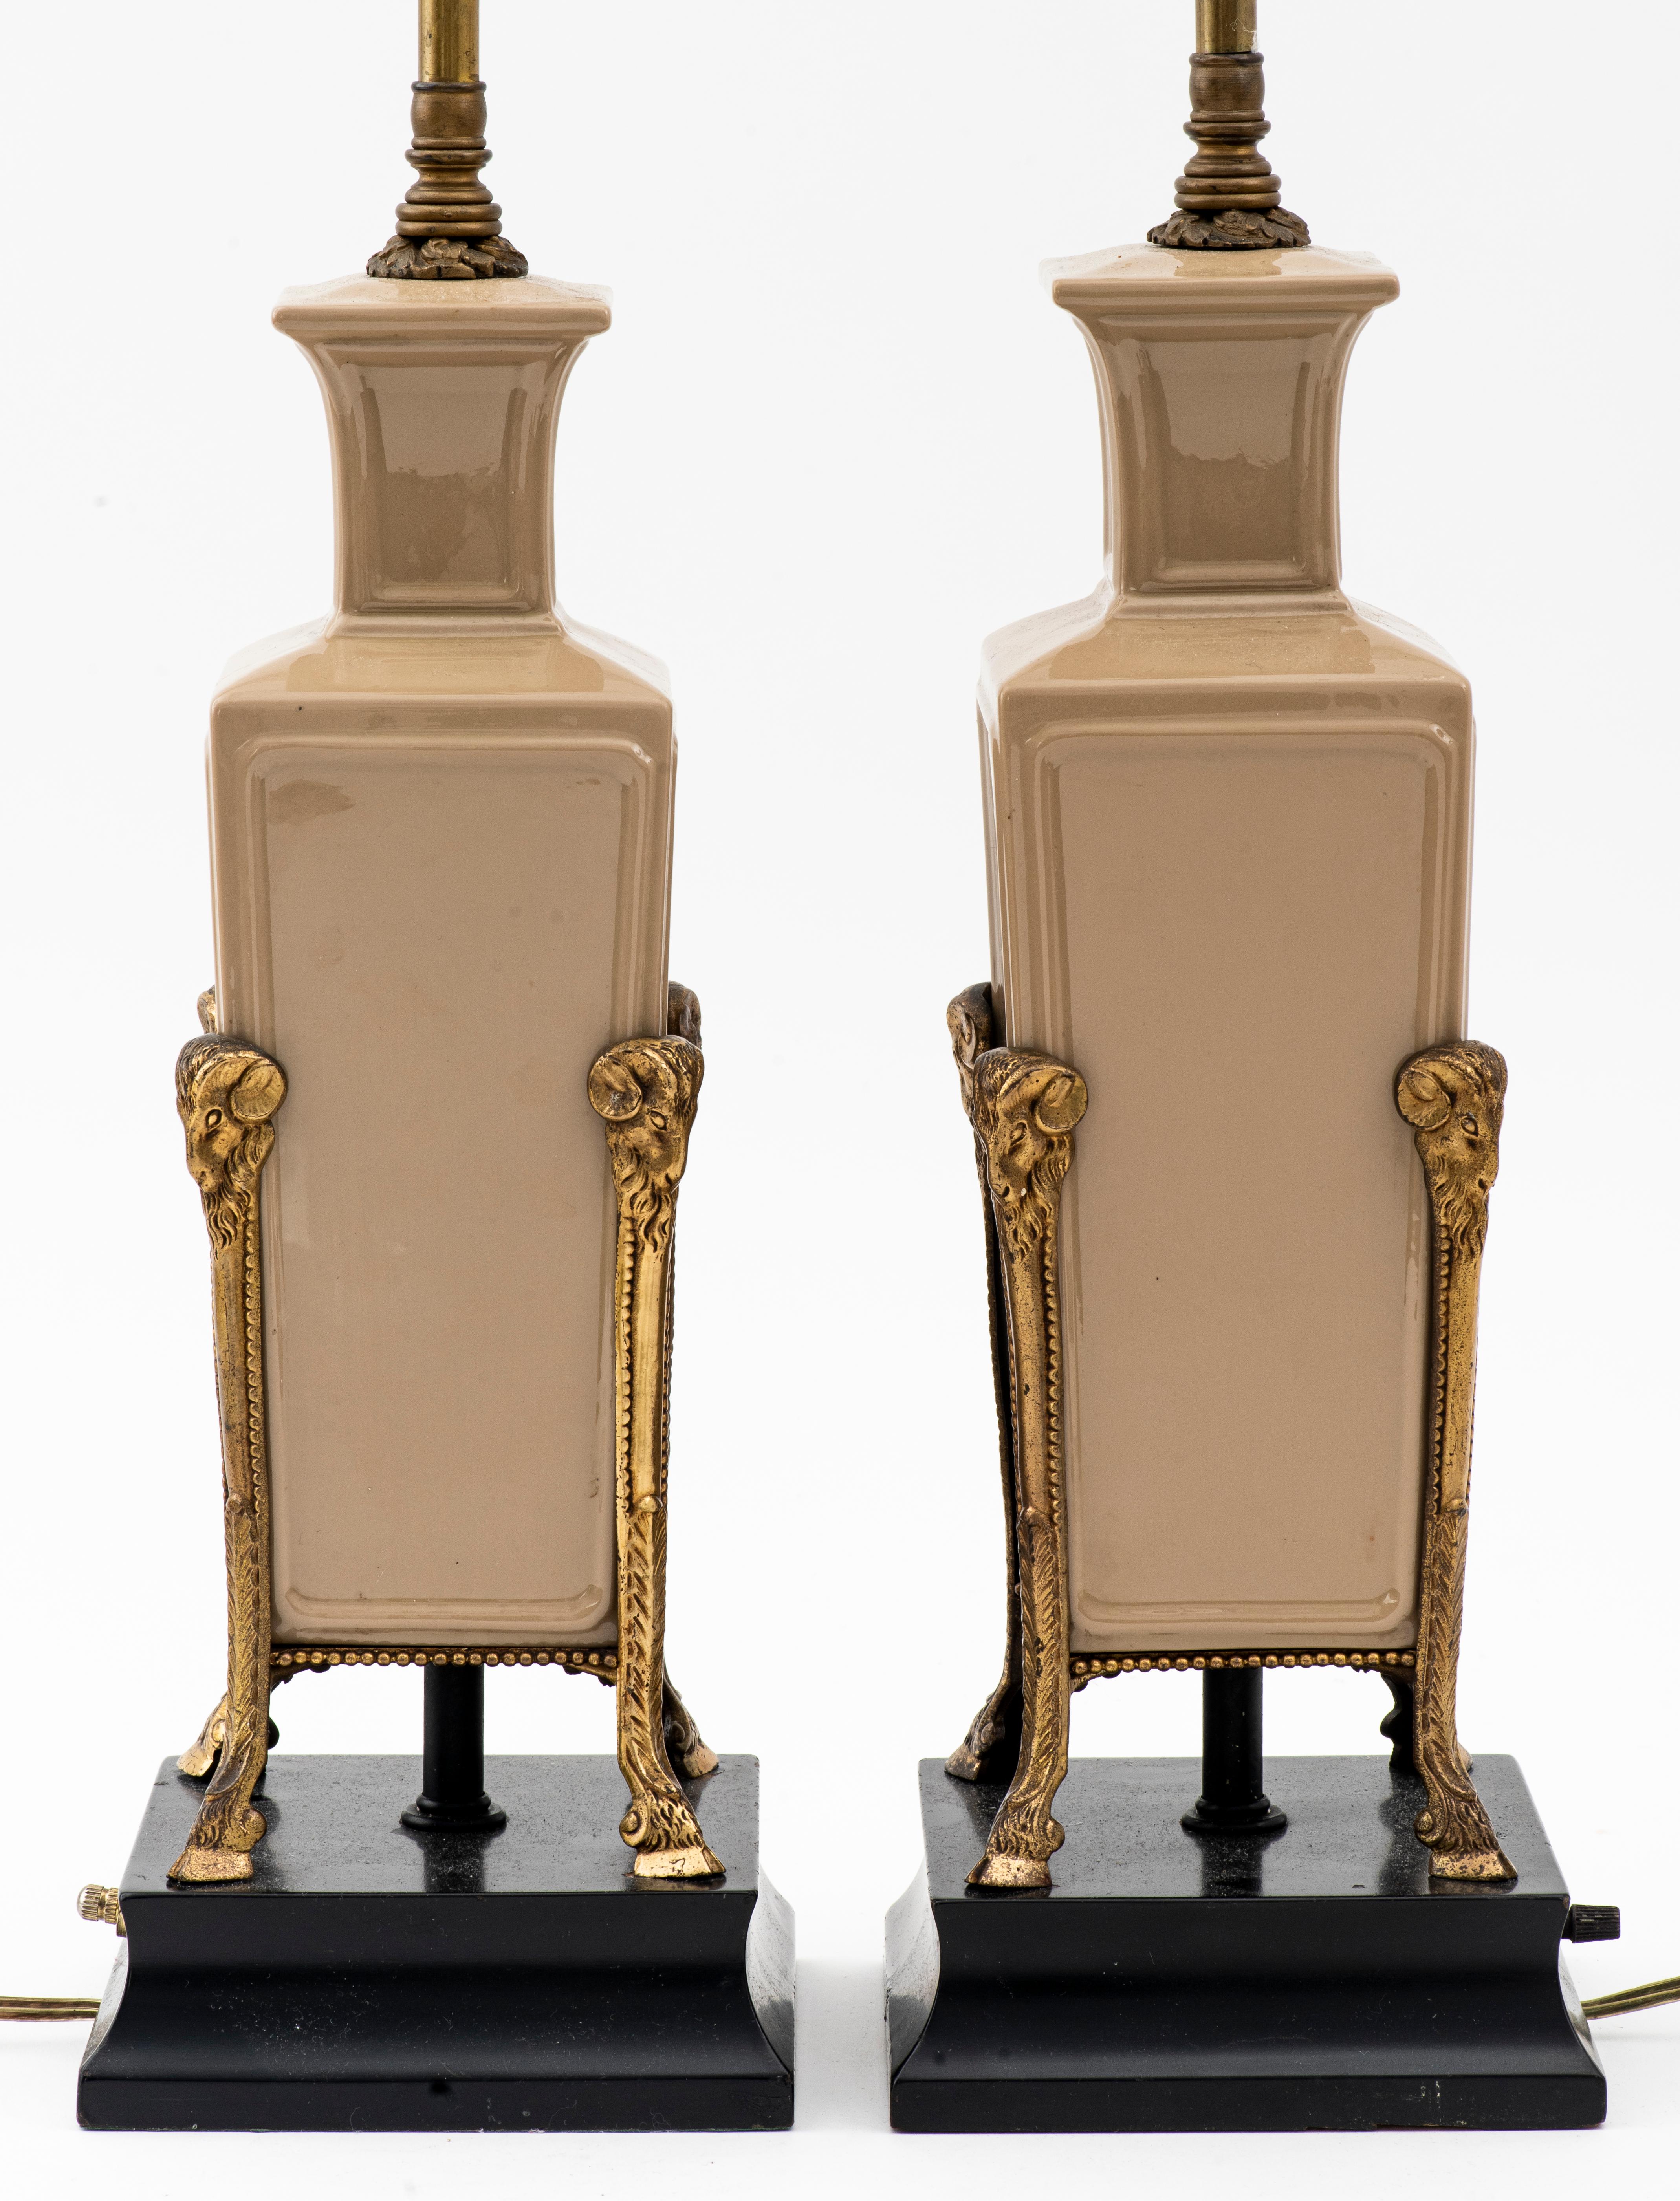 20th Century Pair of Neoclassical Revival Ceramic Table Lamps